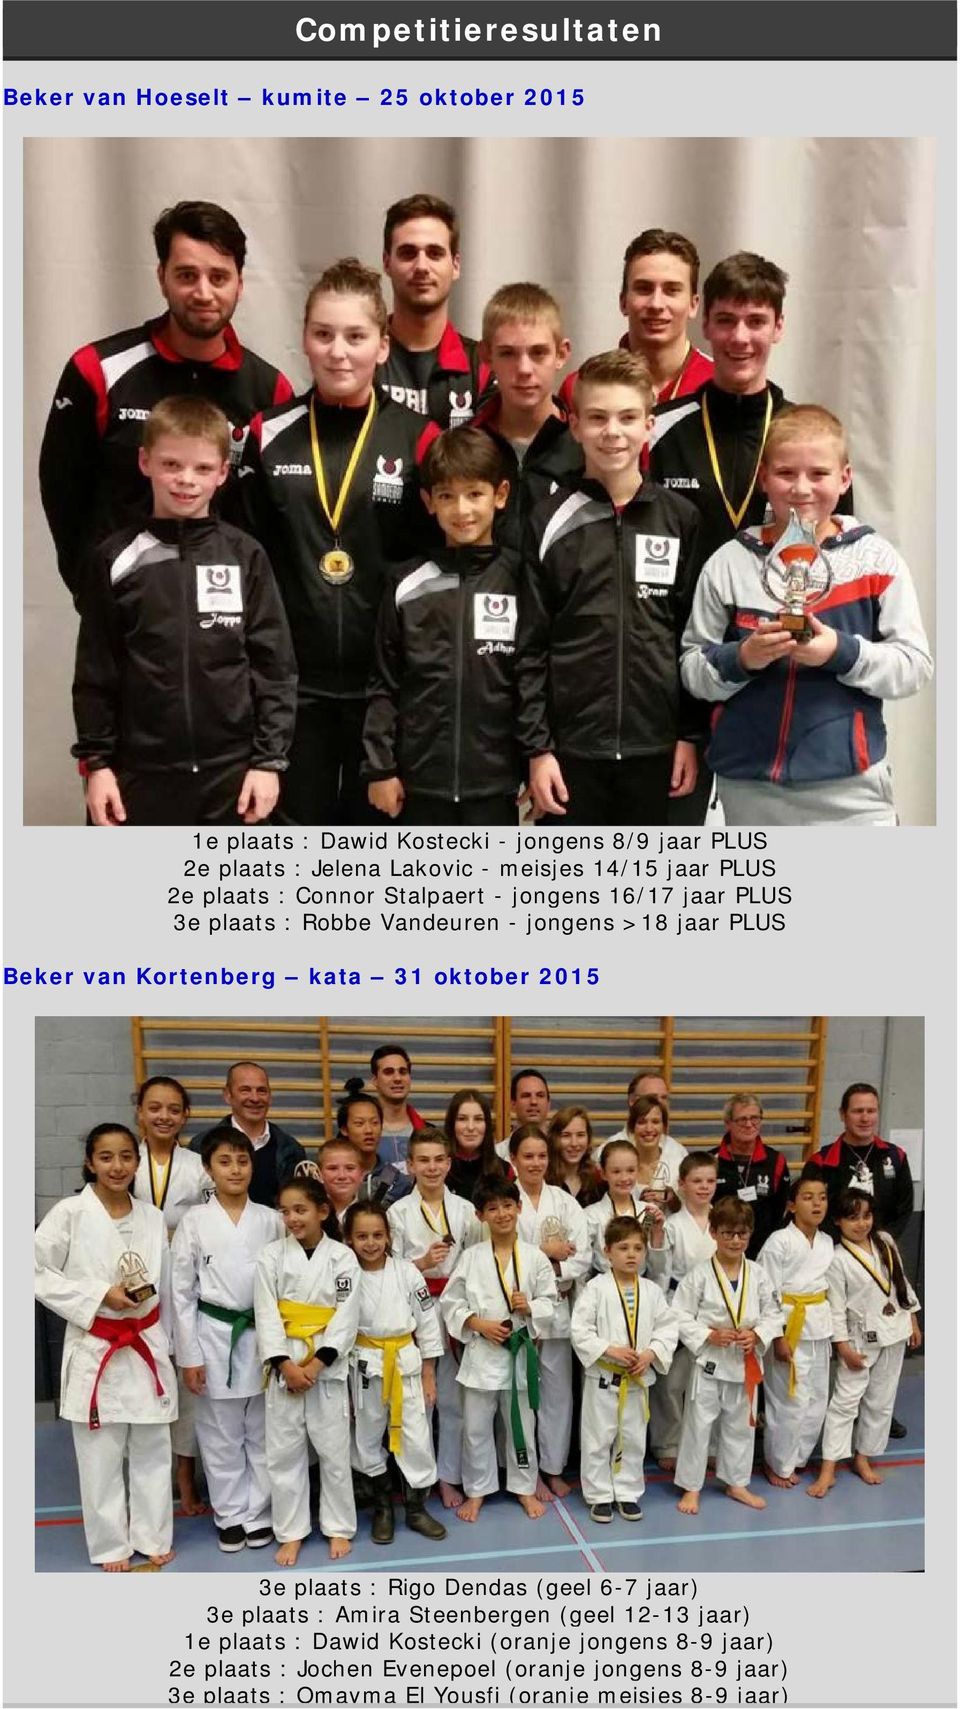 Kortenberg kata 31 oktober 2015 3e plaats : Rigo Dendas (geel 6-7 jaar) 3e plaats : Amira Steenbergen (geel 12-13 jaar) 1e plaats : Dawid